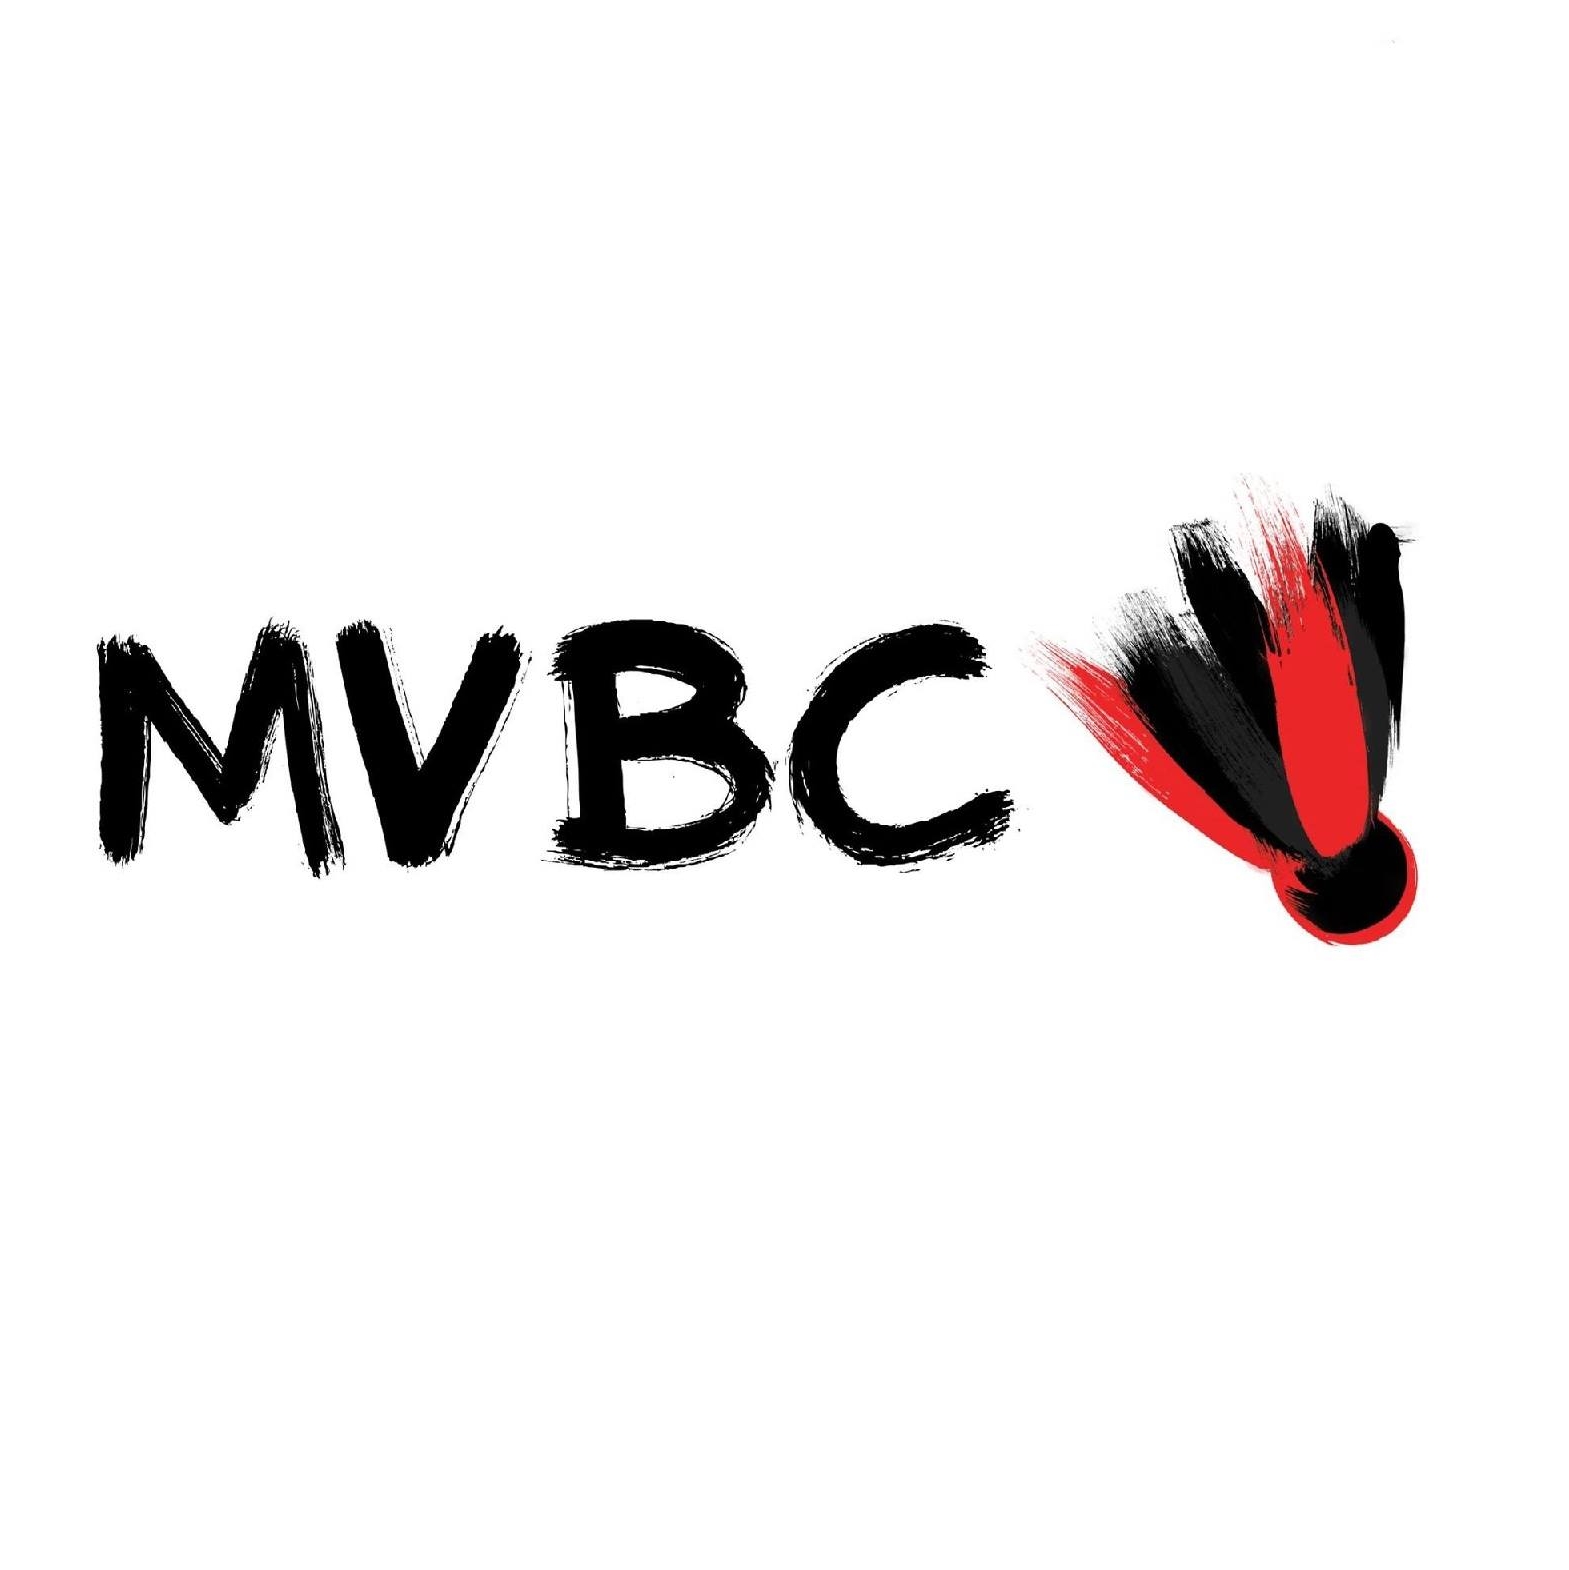 MVBC